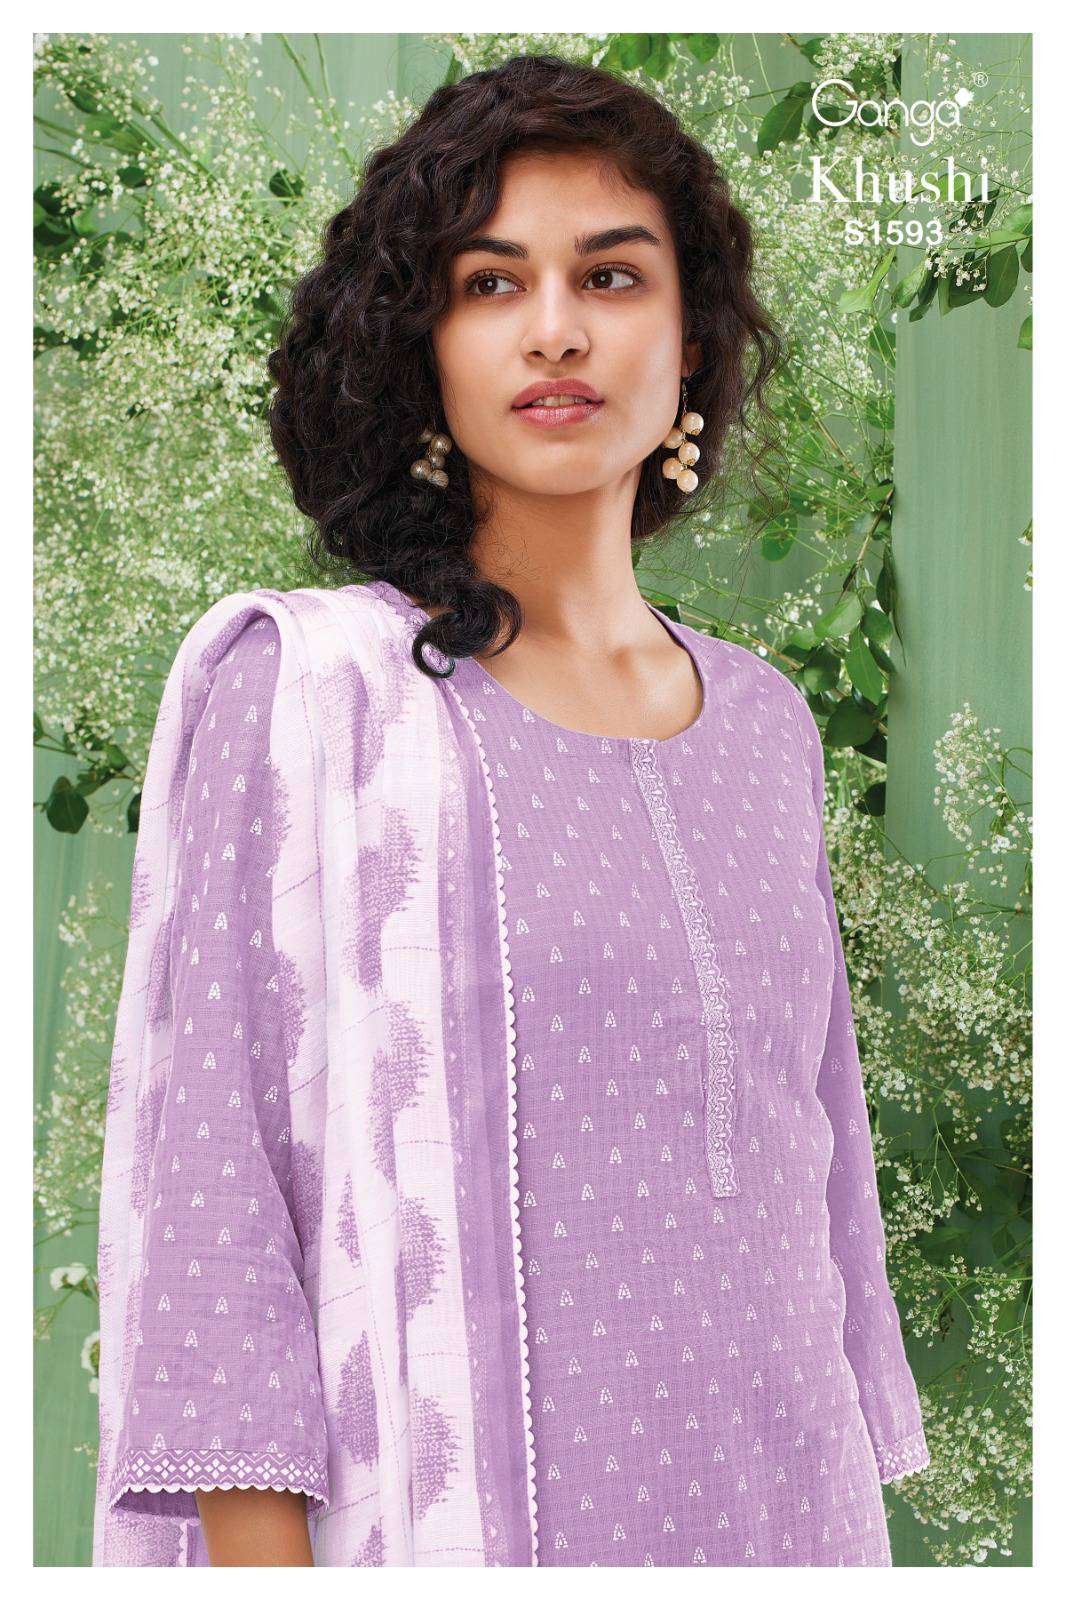 Ganga Khushi 1593 Exclusive Cotton Ganga Fashion Suit Catalog Dealers